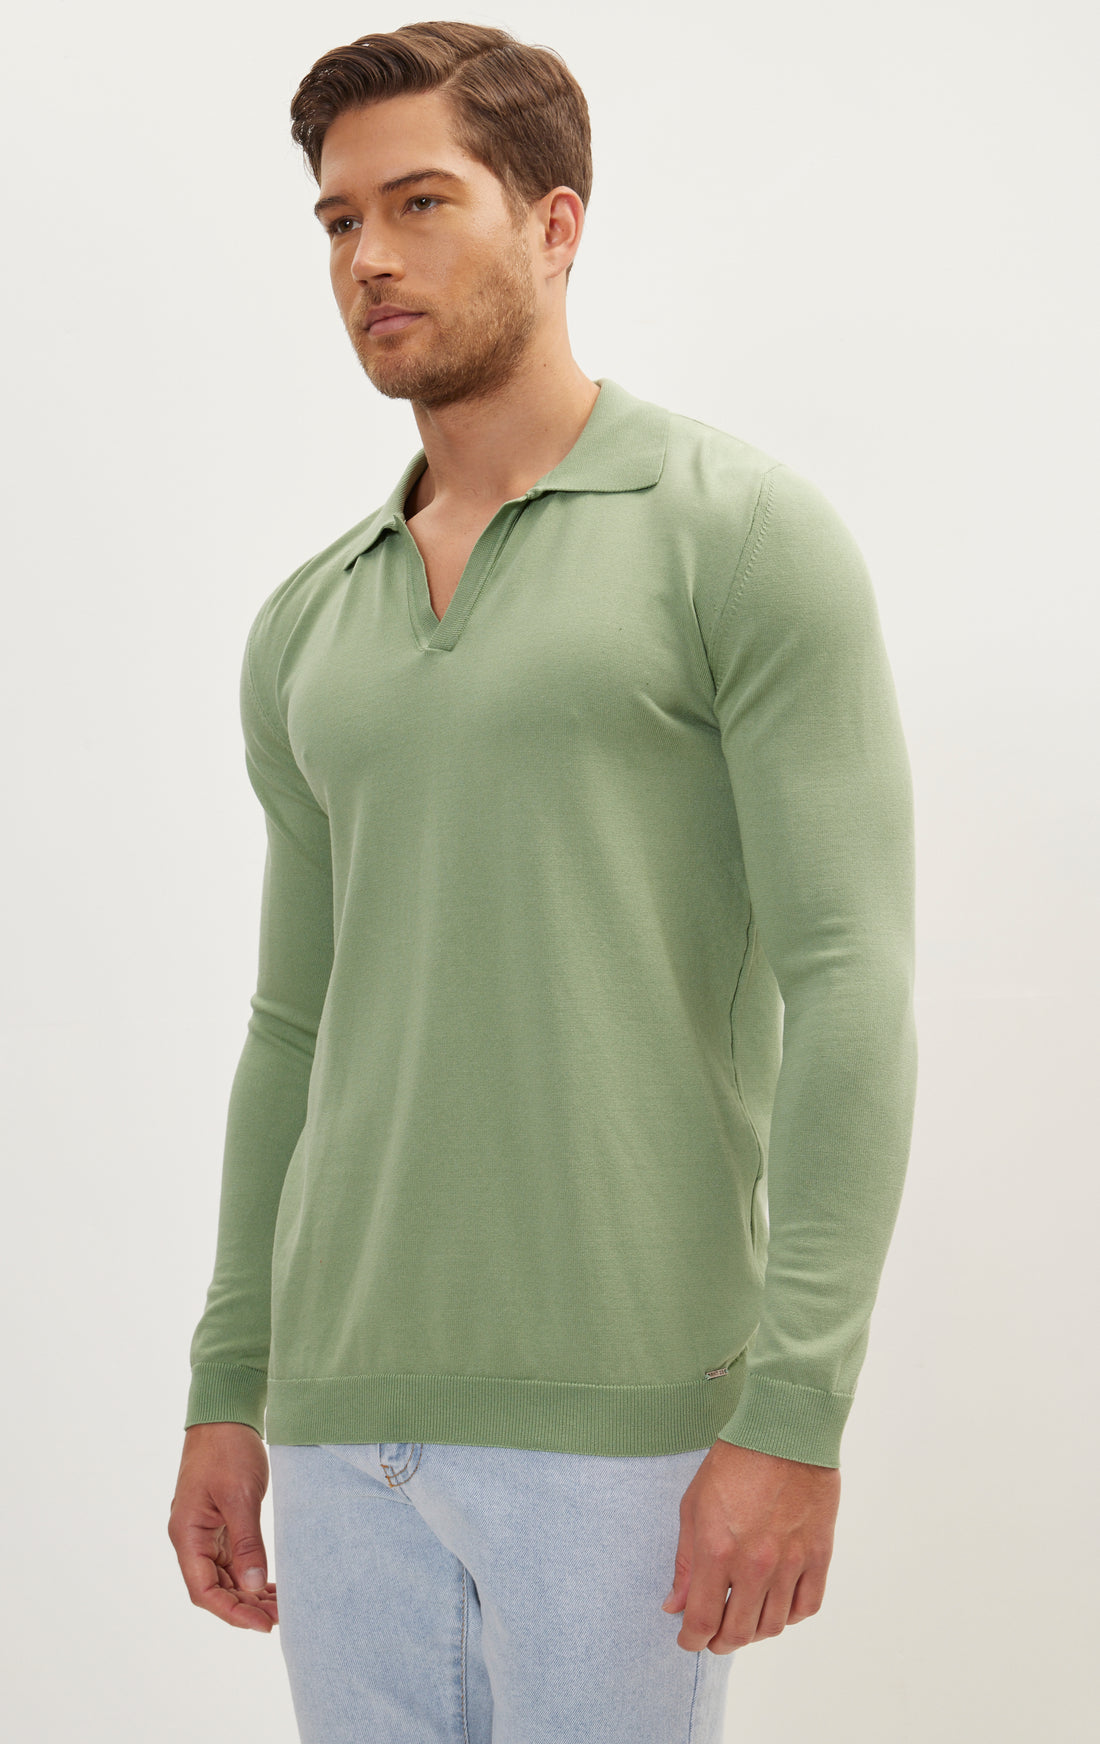 N° 6464 johnny-collar sweater polo - Teal Green